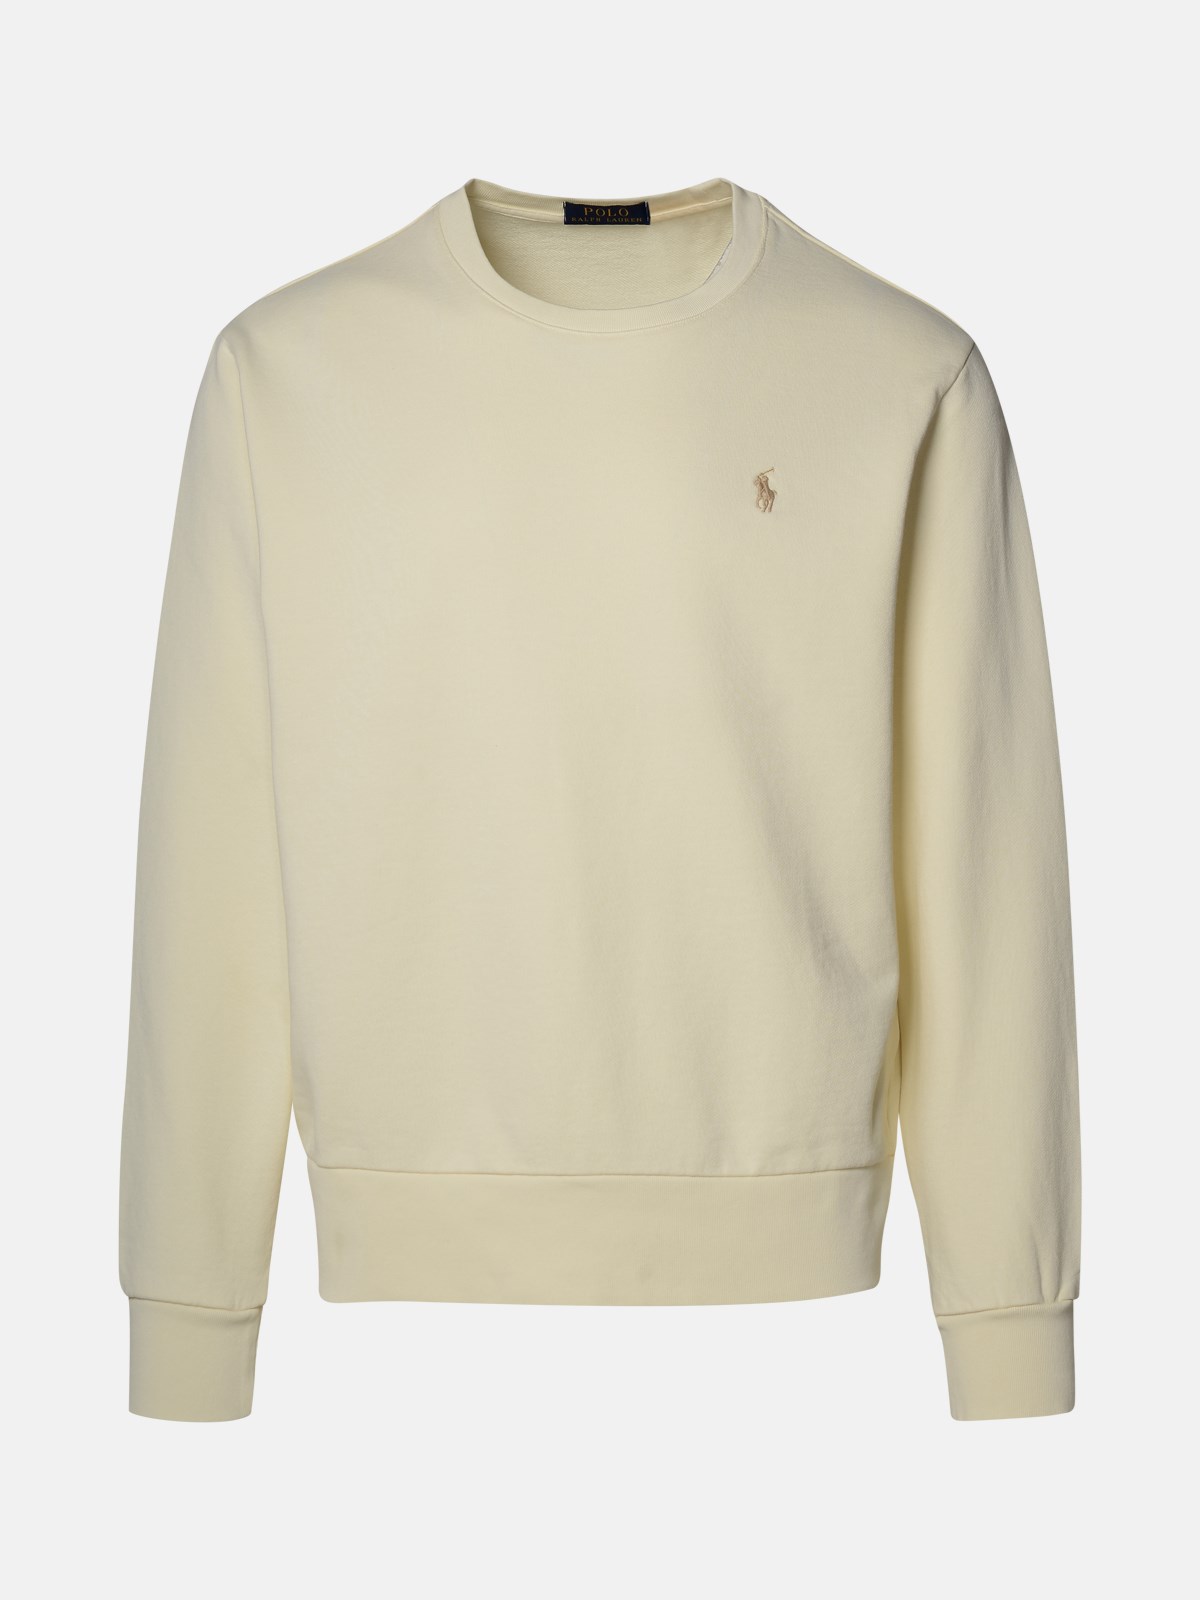 Polo Ralph Lauren Ivory Cotton Sweatshirt In Cream